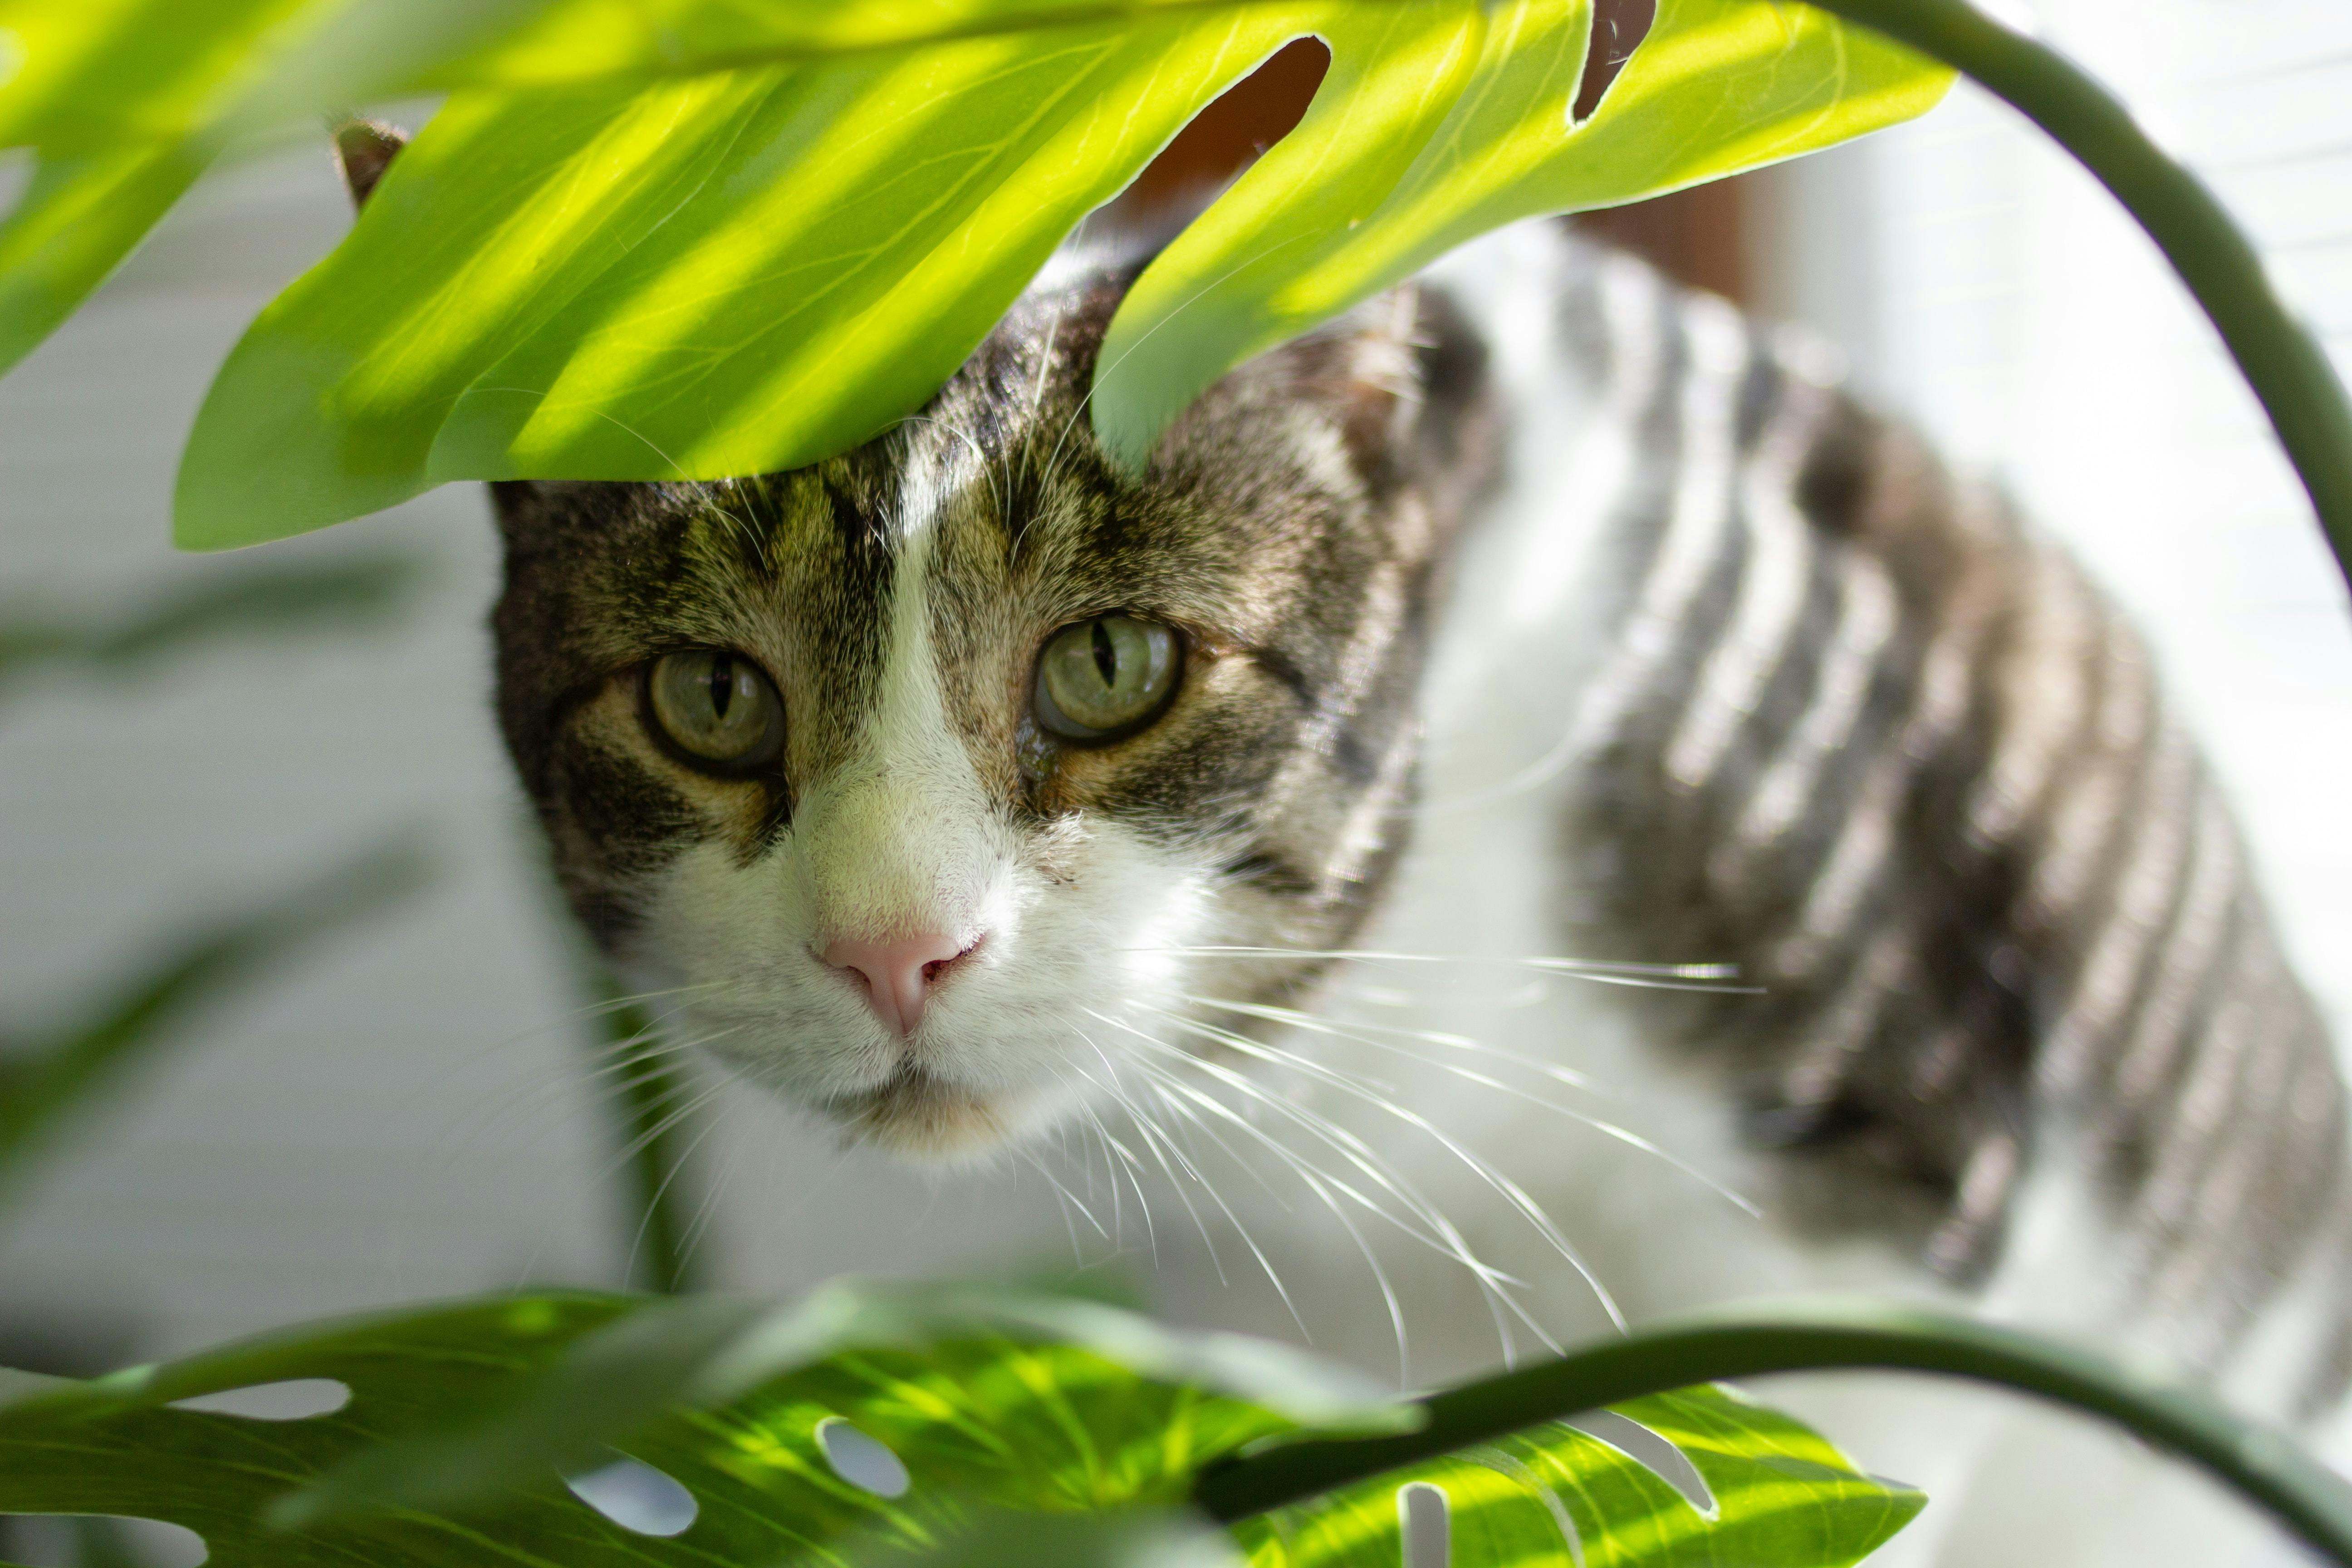 Cat hiding behind plants